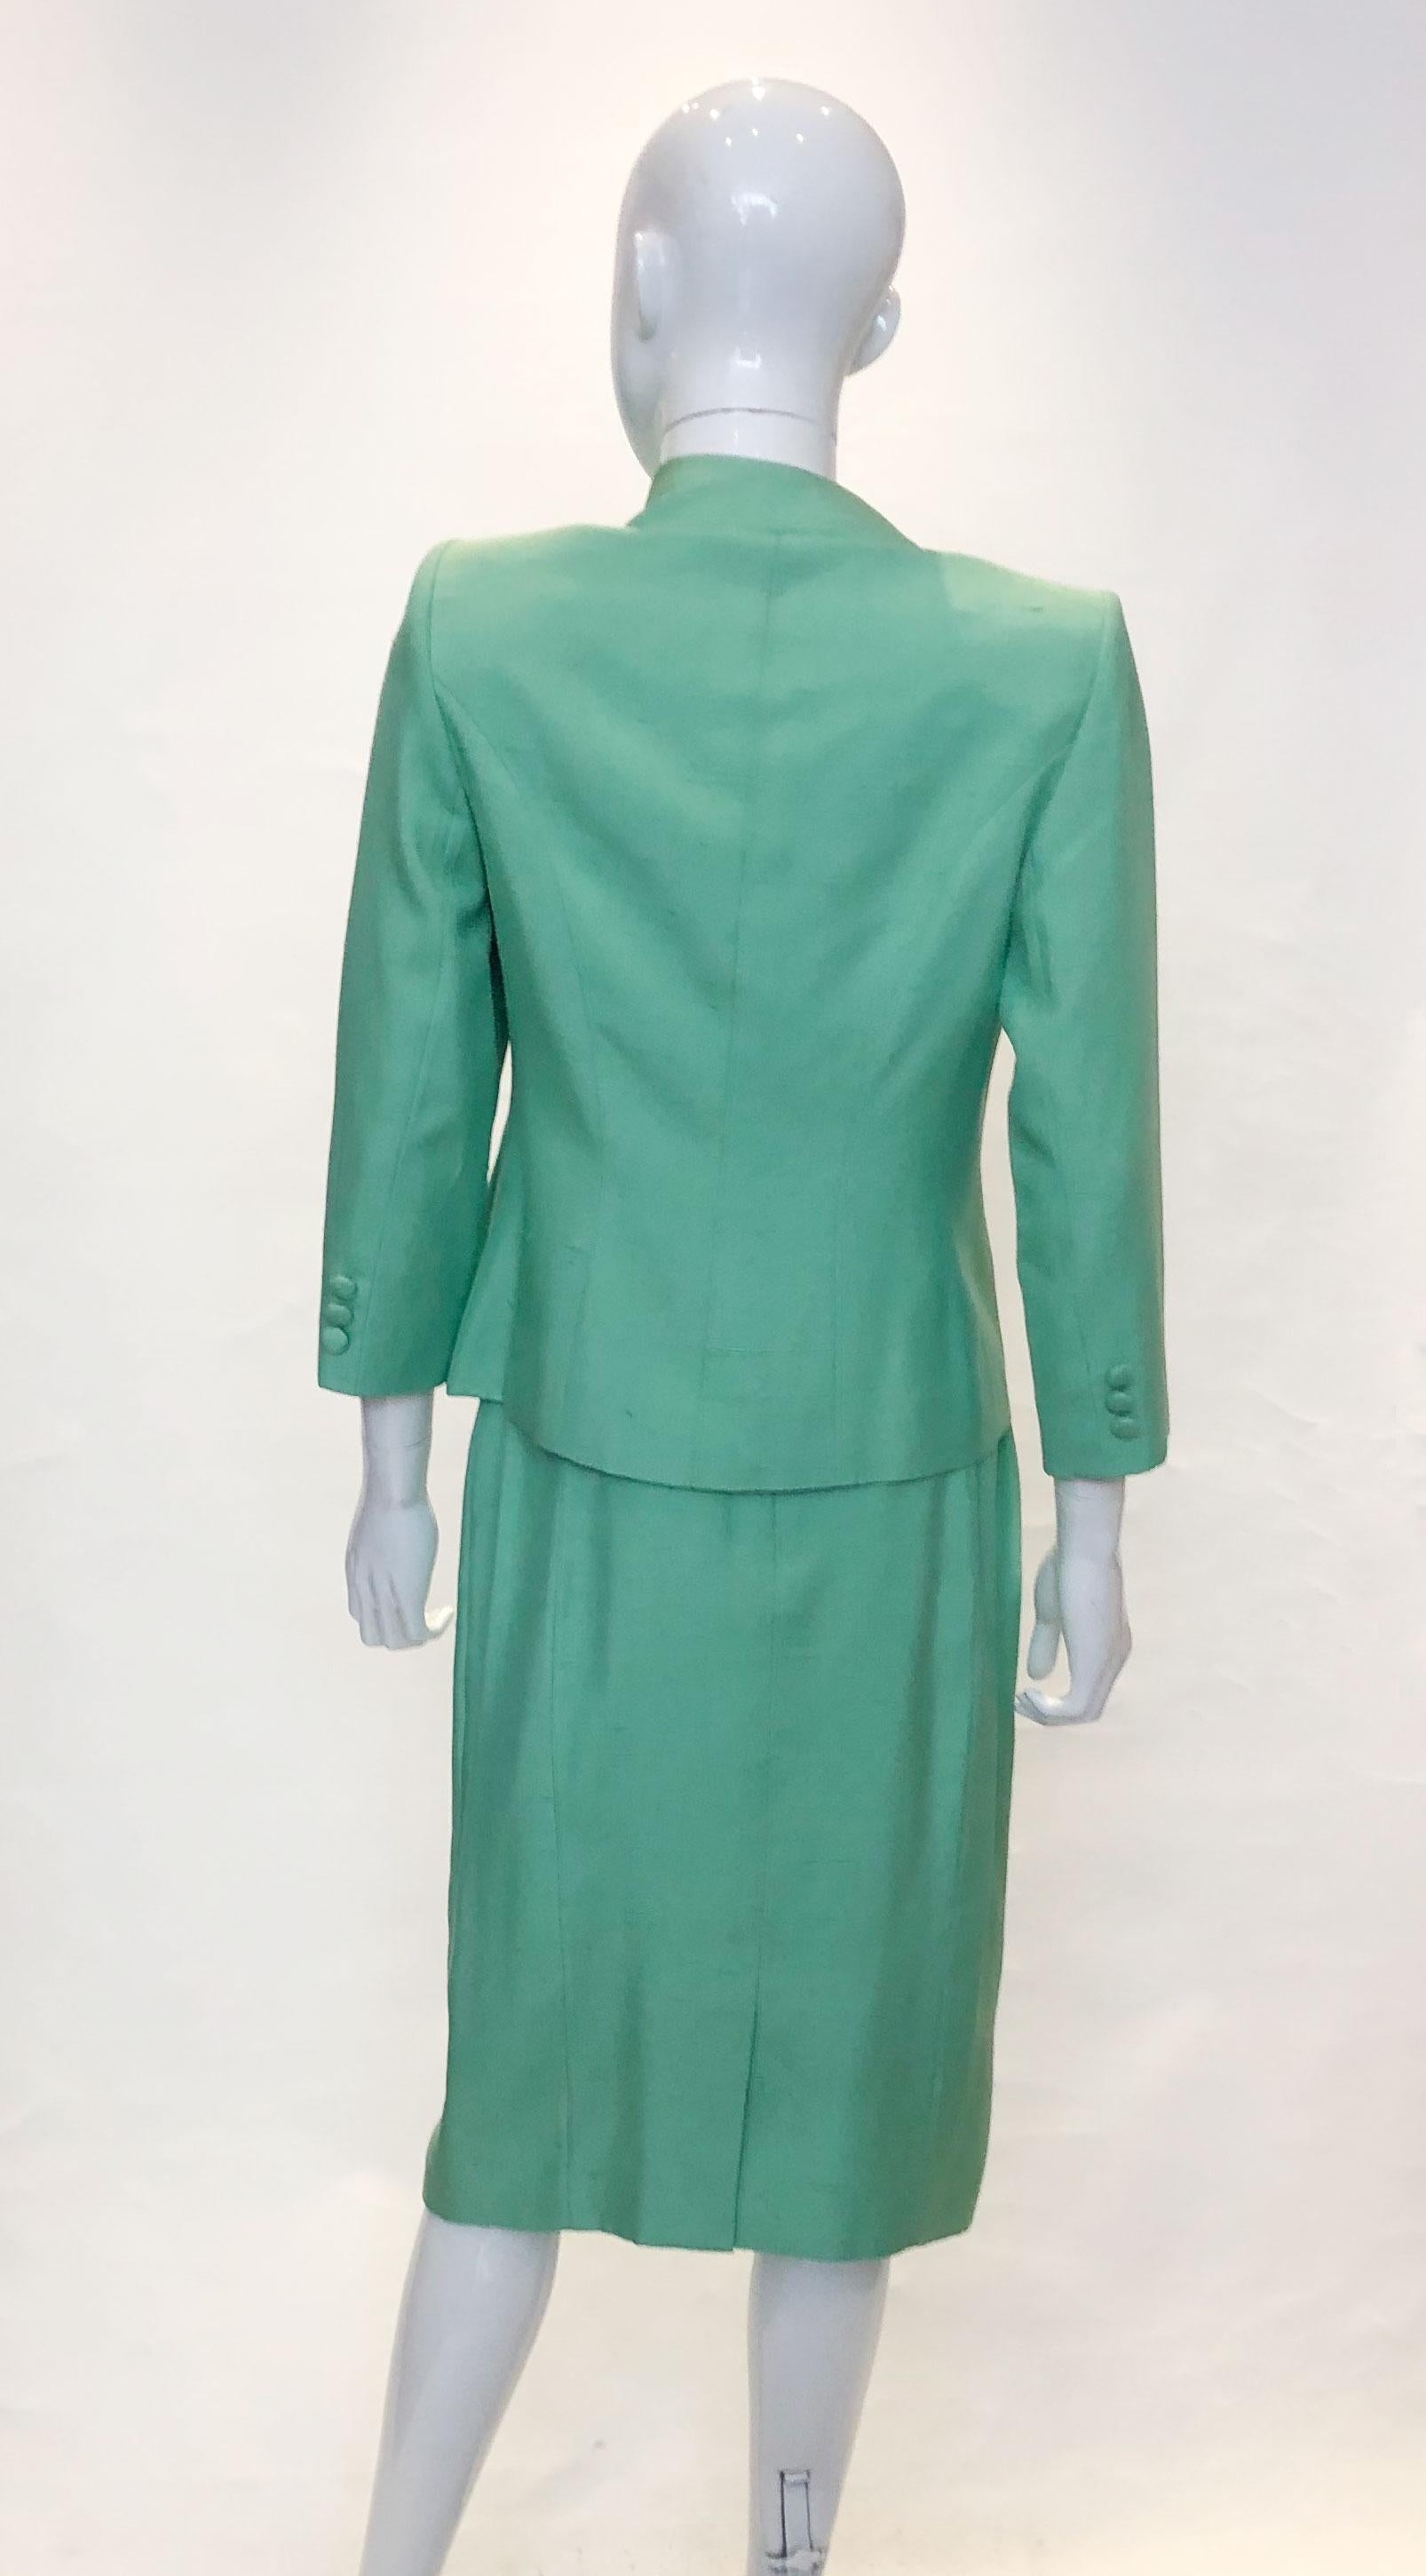 A vintage Catherine Walker skirt suit in emerald green silk. 
Measurements : Jacket bust 38'', length 21'', skirt waist 28'' , length 27''